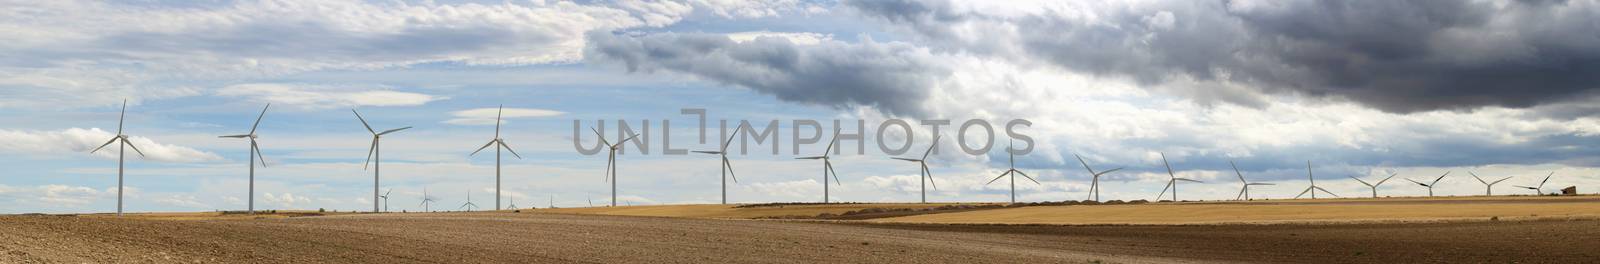 Wind generators panoramic image.